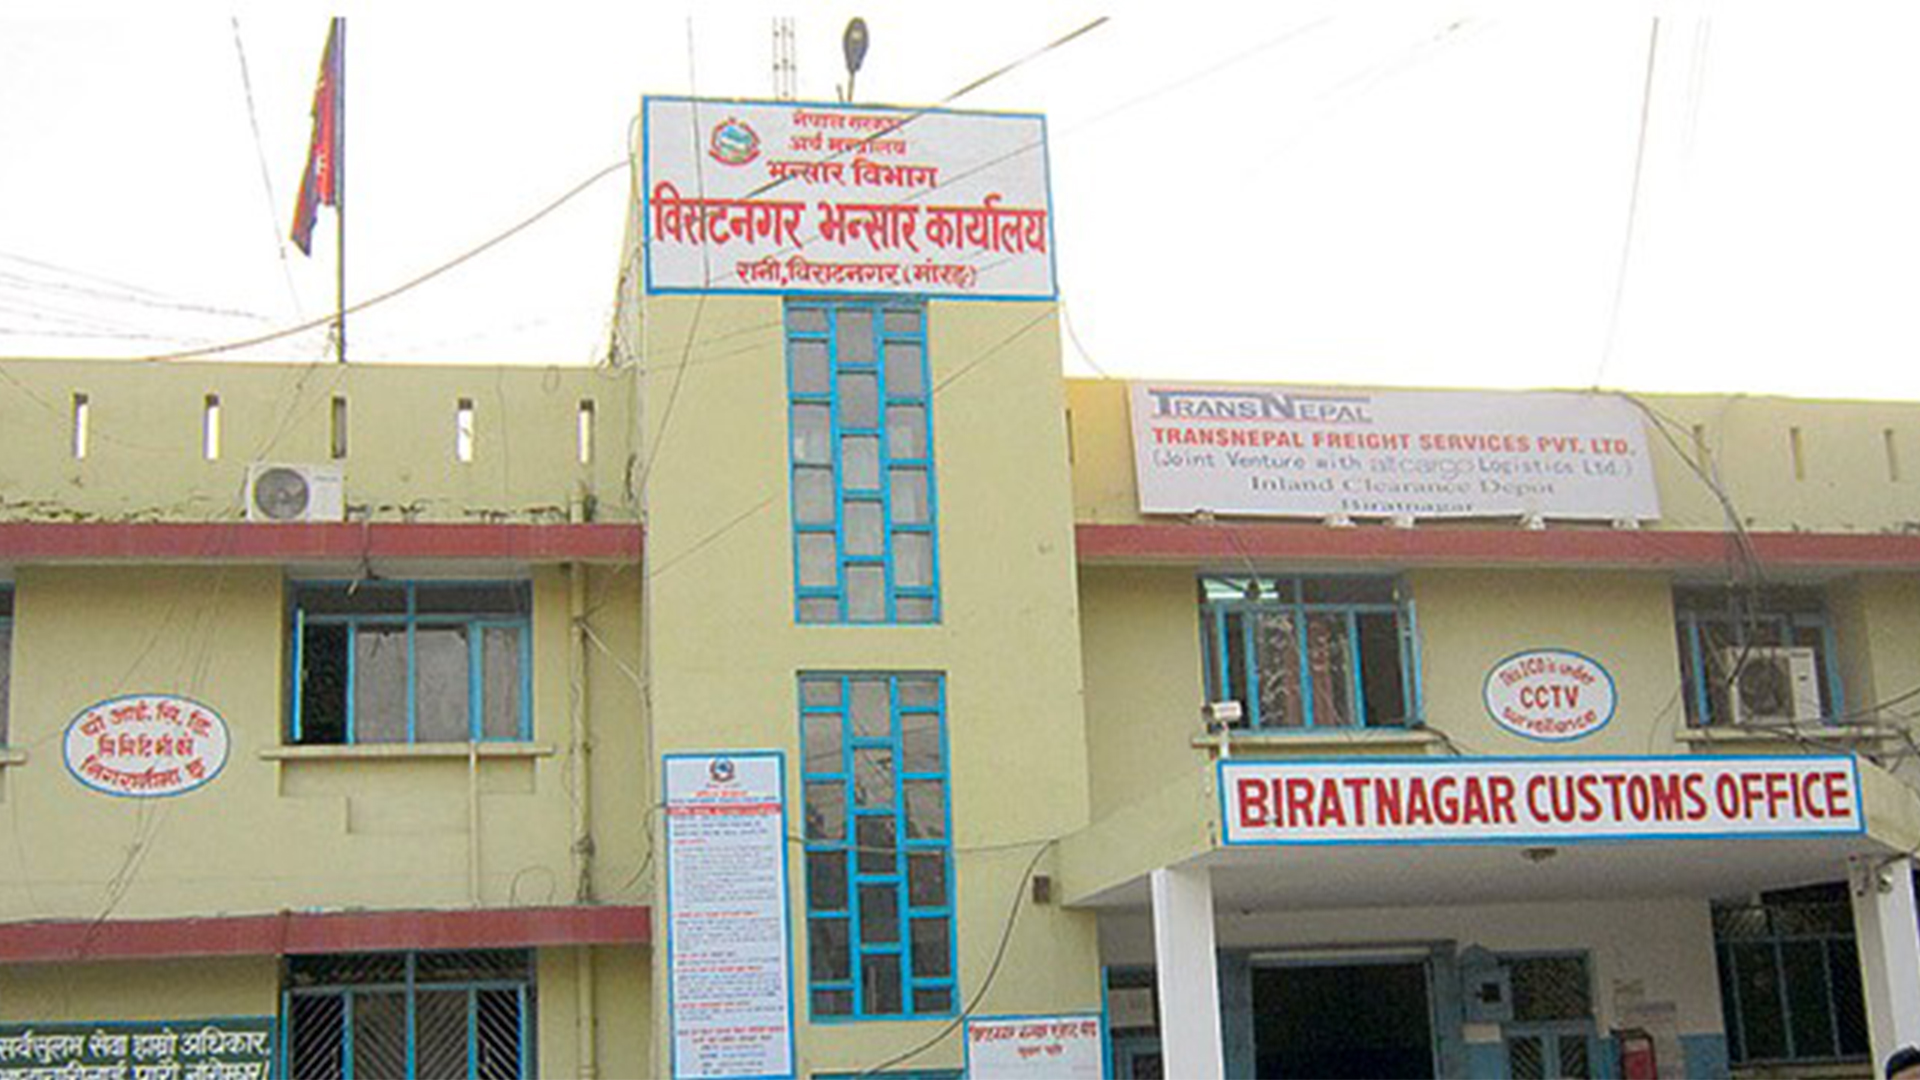 4 from Biratnagar Customs found positive for Covid-19